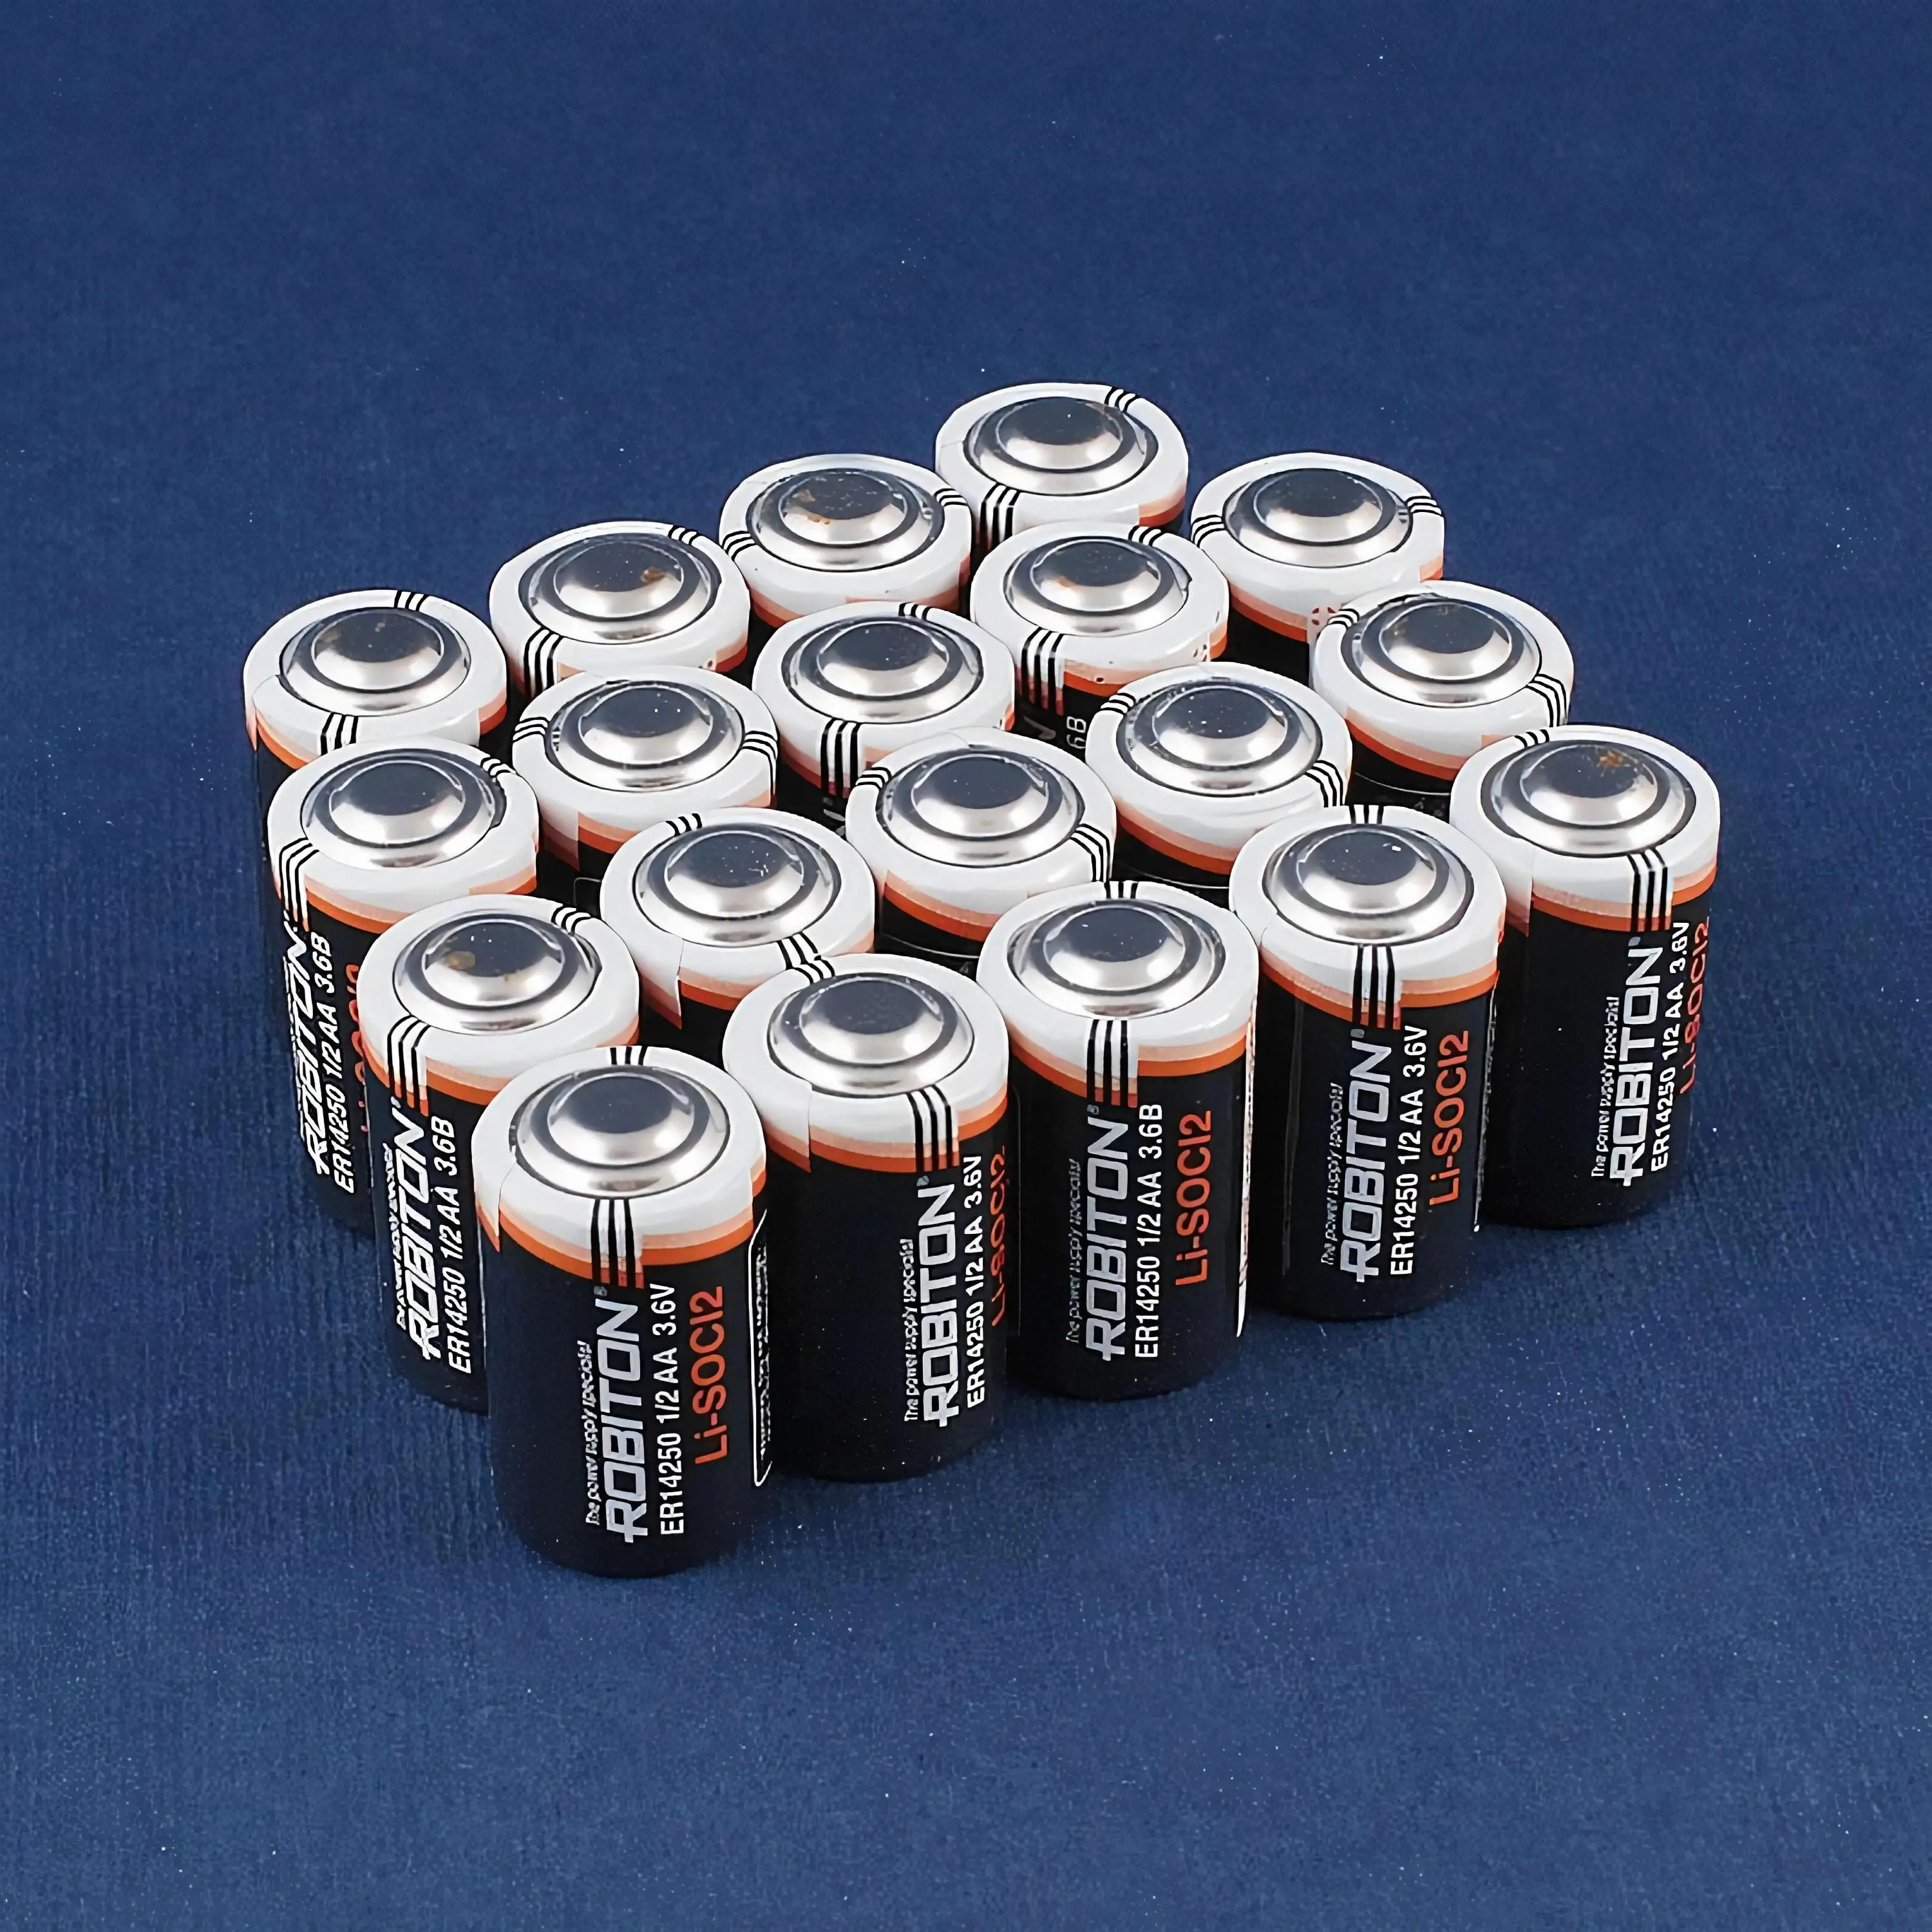 Батарейки питания купить. Батарейка er14250 3.6v Size 1/2 AA. Батарейки 2аа и 3аа. Батарейка 1/2 AA ДНС. 2aa батарейка.